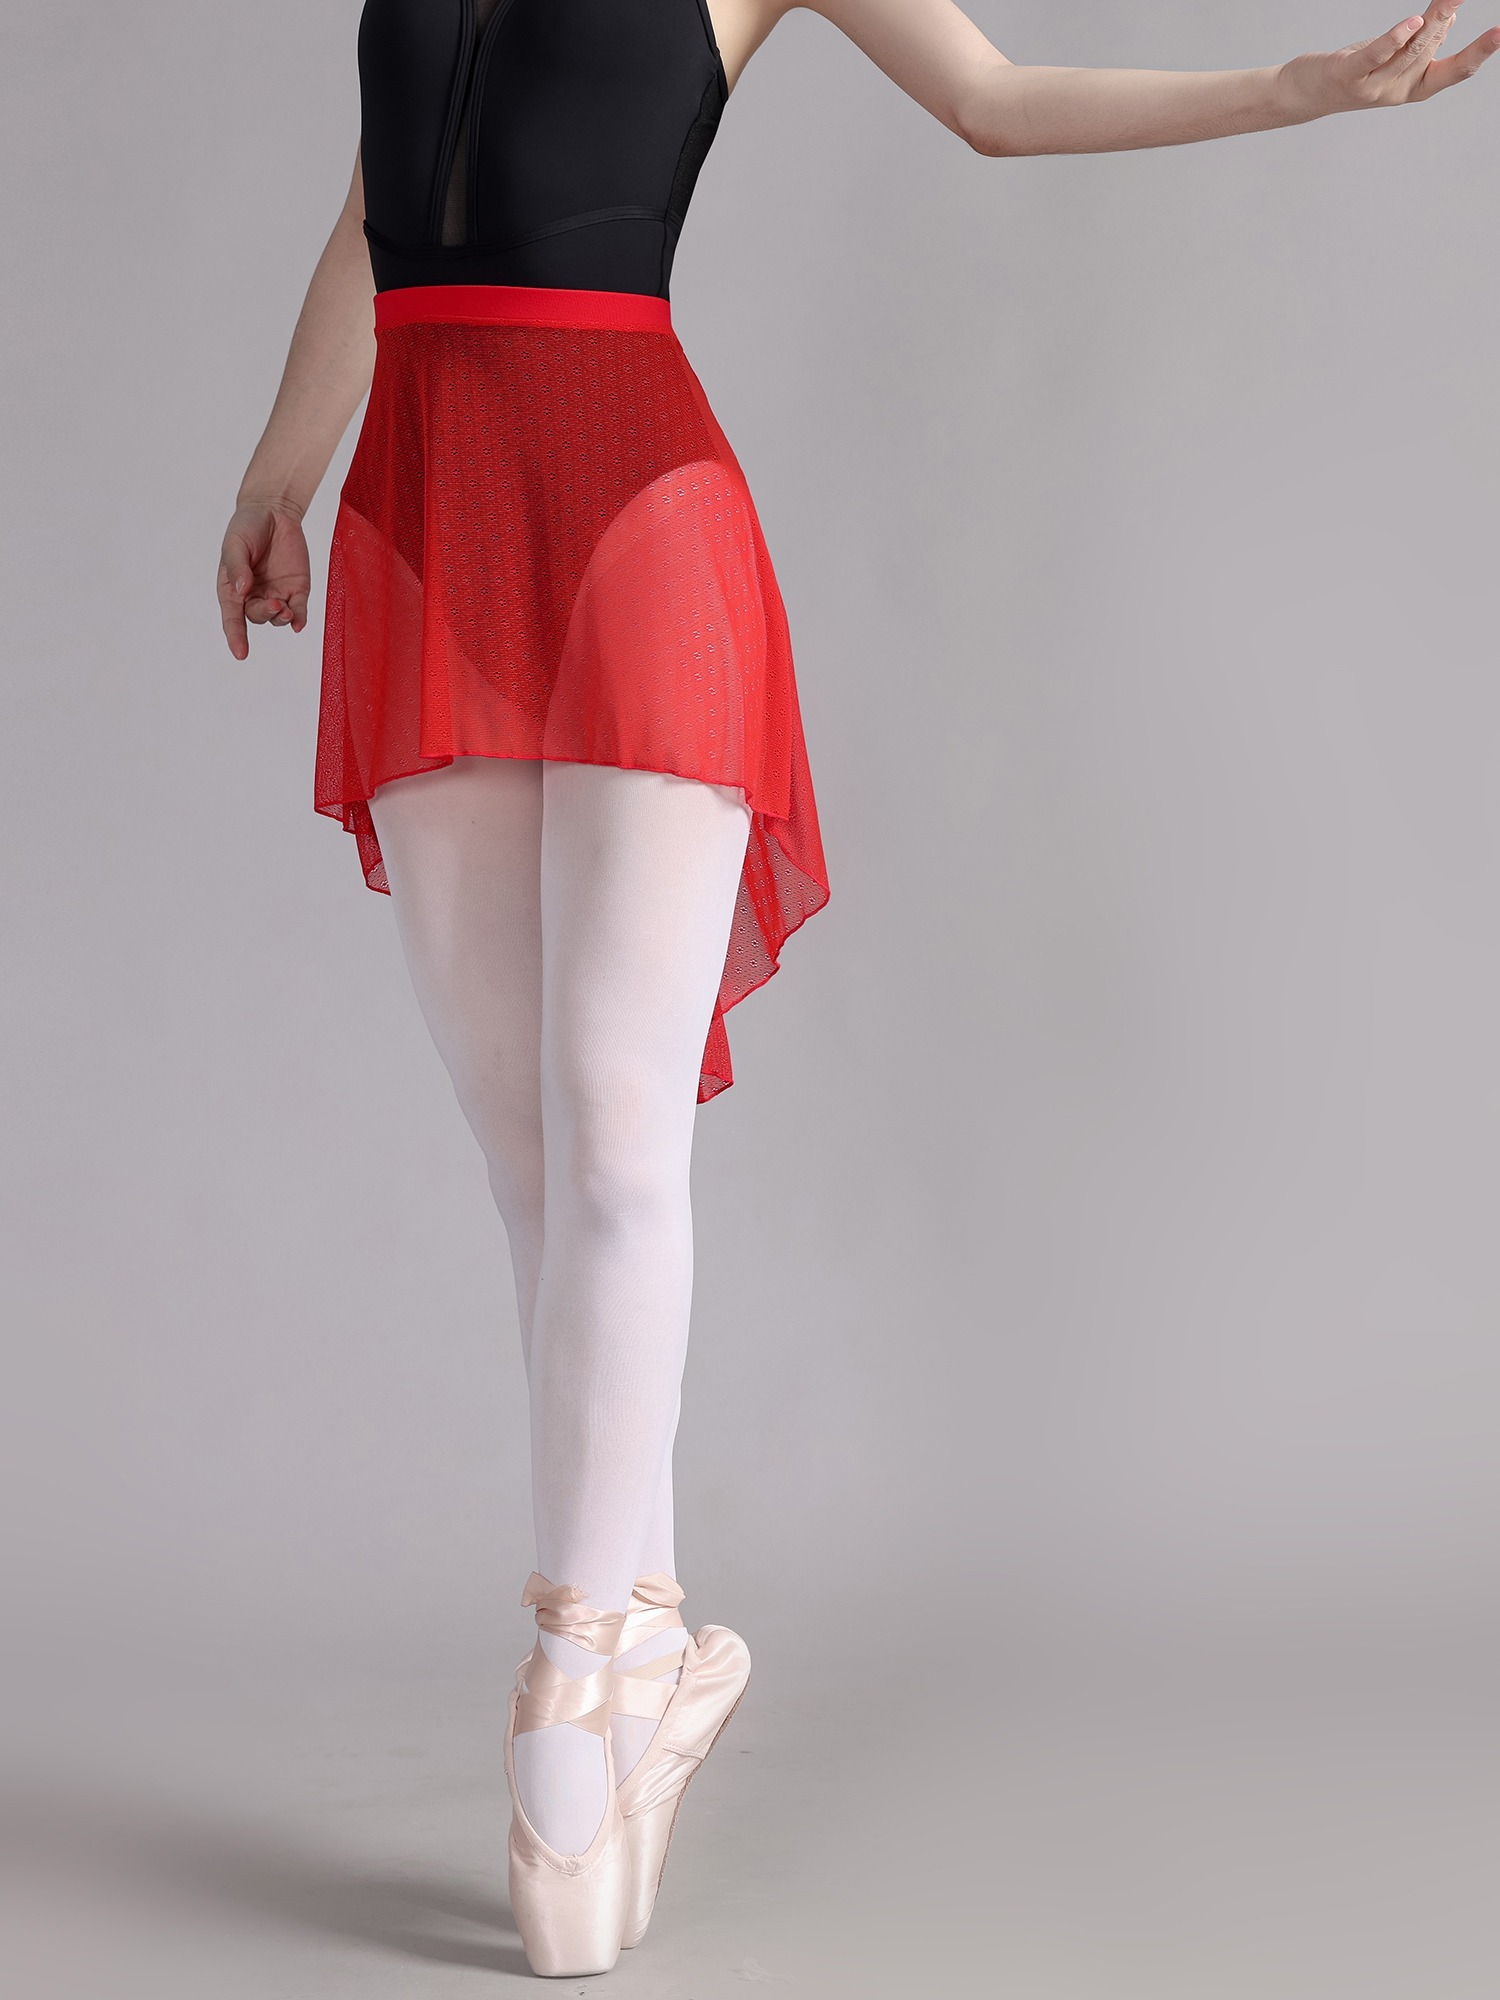 Falda de Ballet para mujer, Falda de baile de malla suave Irregular doblada  lateral, Falda corta translúcida para bailar